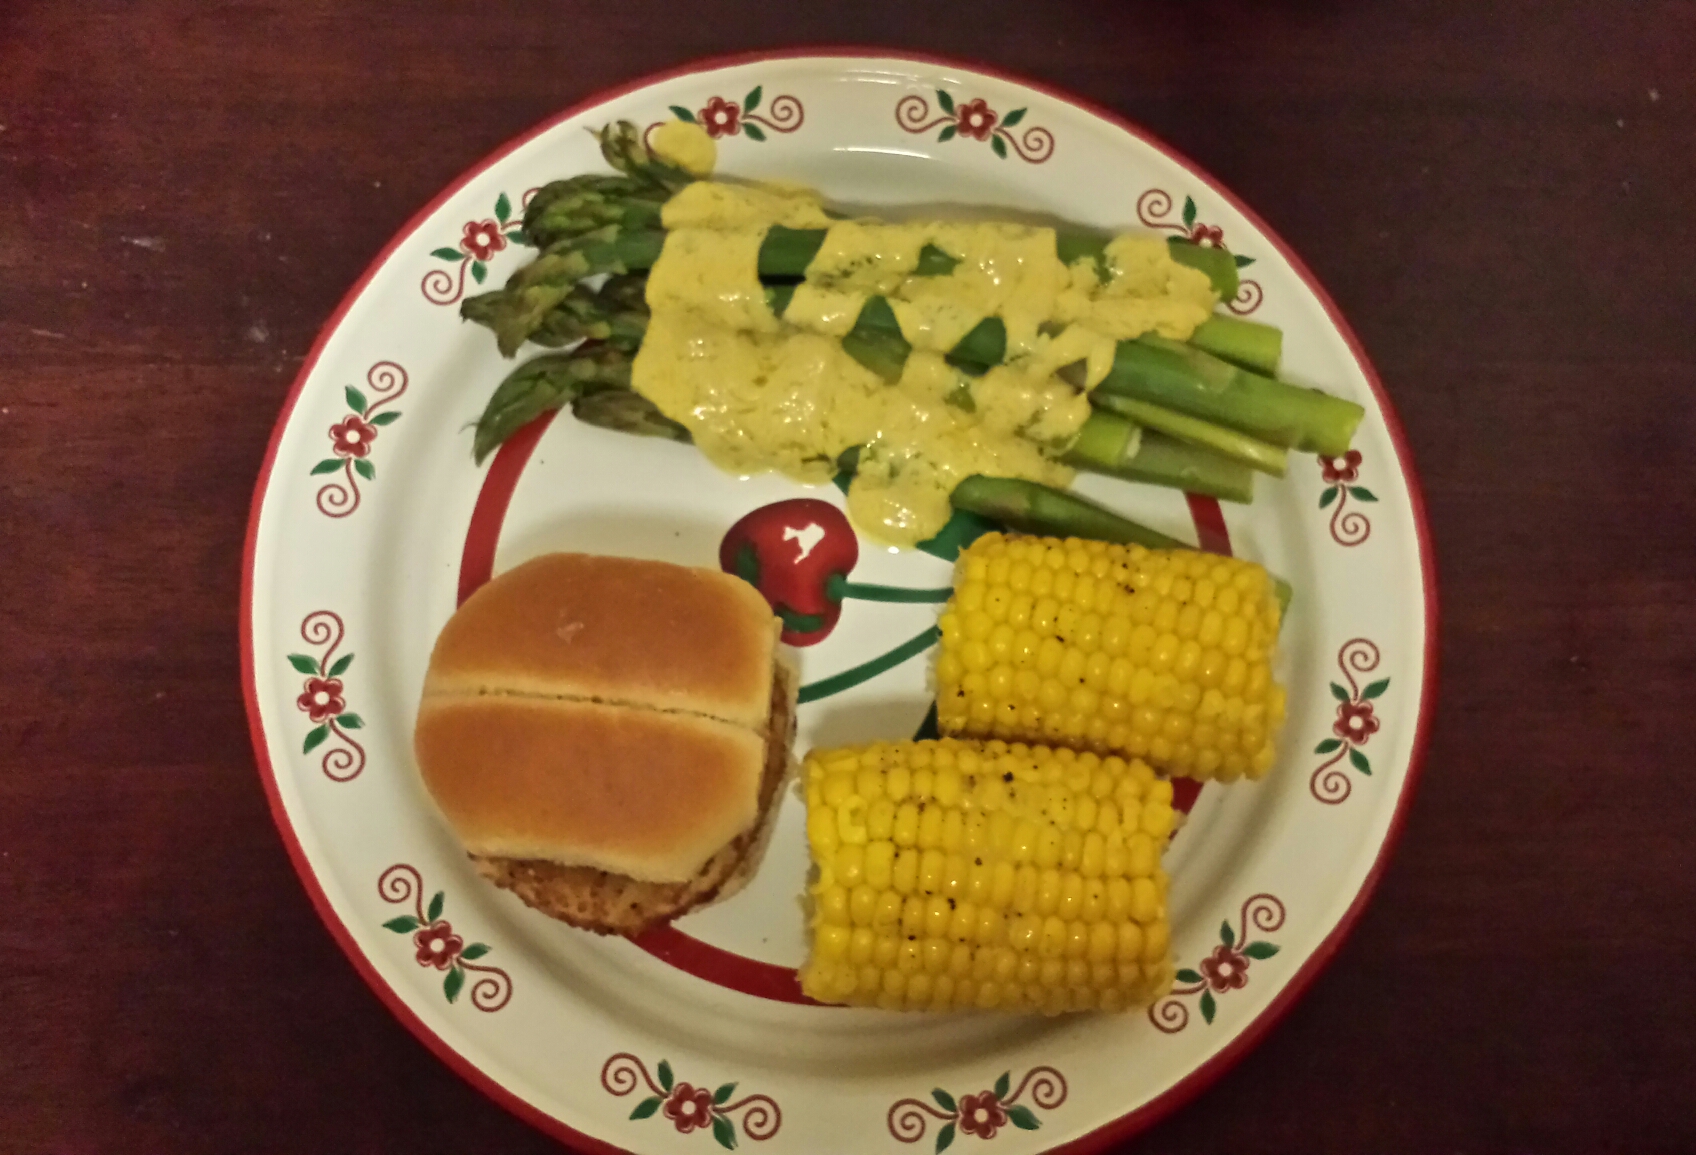 Asparagus with vegan hollandaise sauce, corn on the cob, and Gardein Chik'n Slider